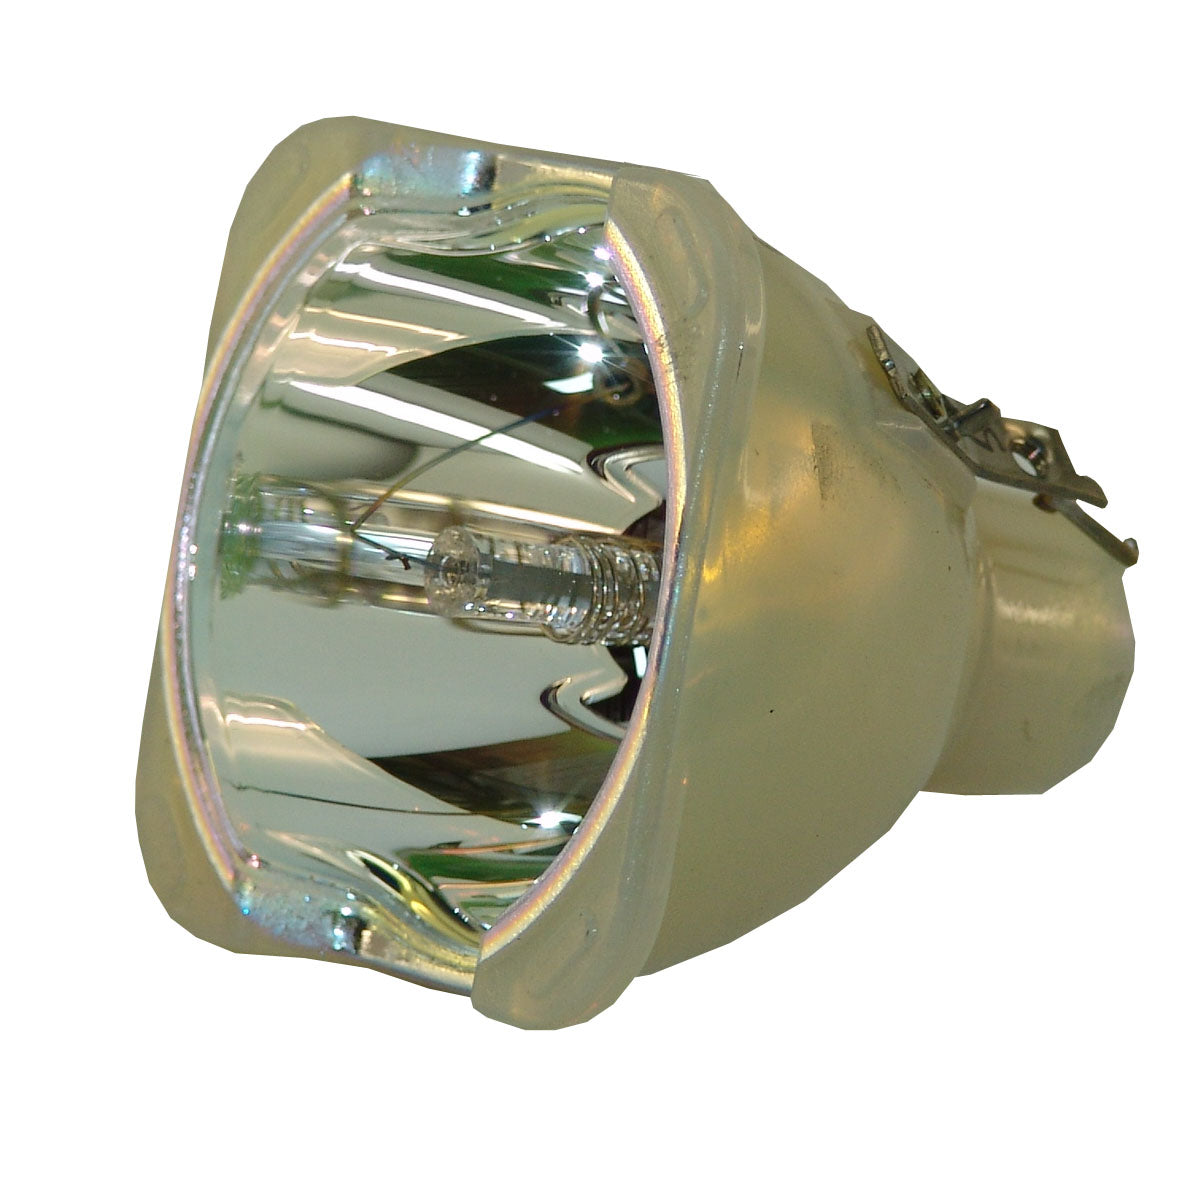 3D Perception 400-0003-00 Philips Projector Bare Lamp